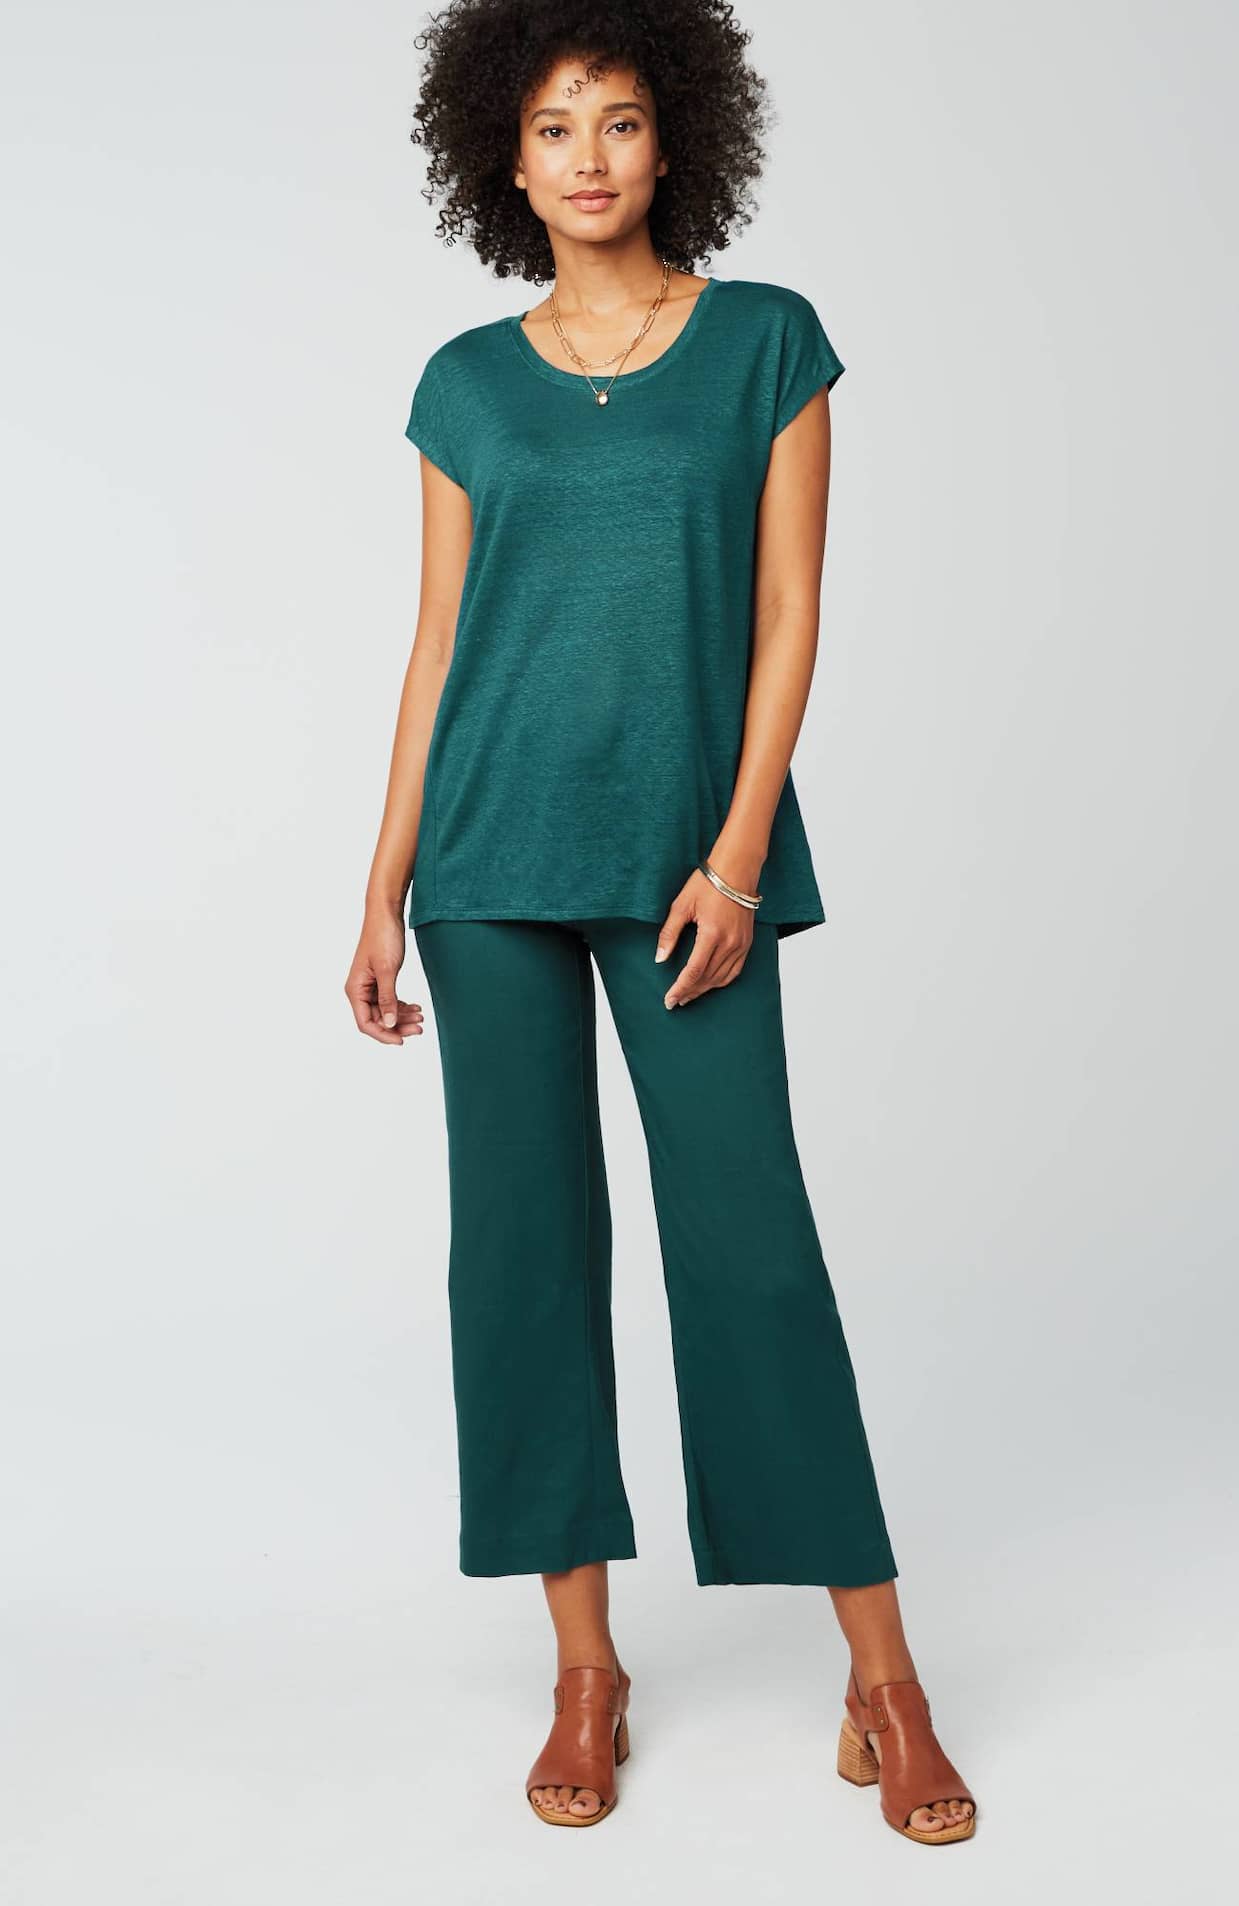 J Jill Pants Crop Wide Leg Bayleaf Green Womens Size Small Elastic Waist